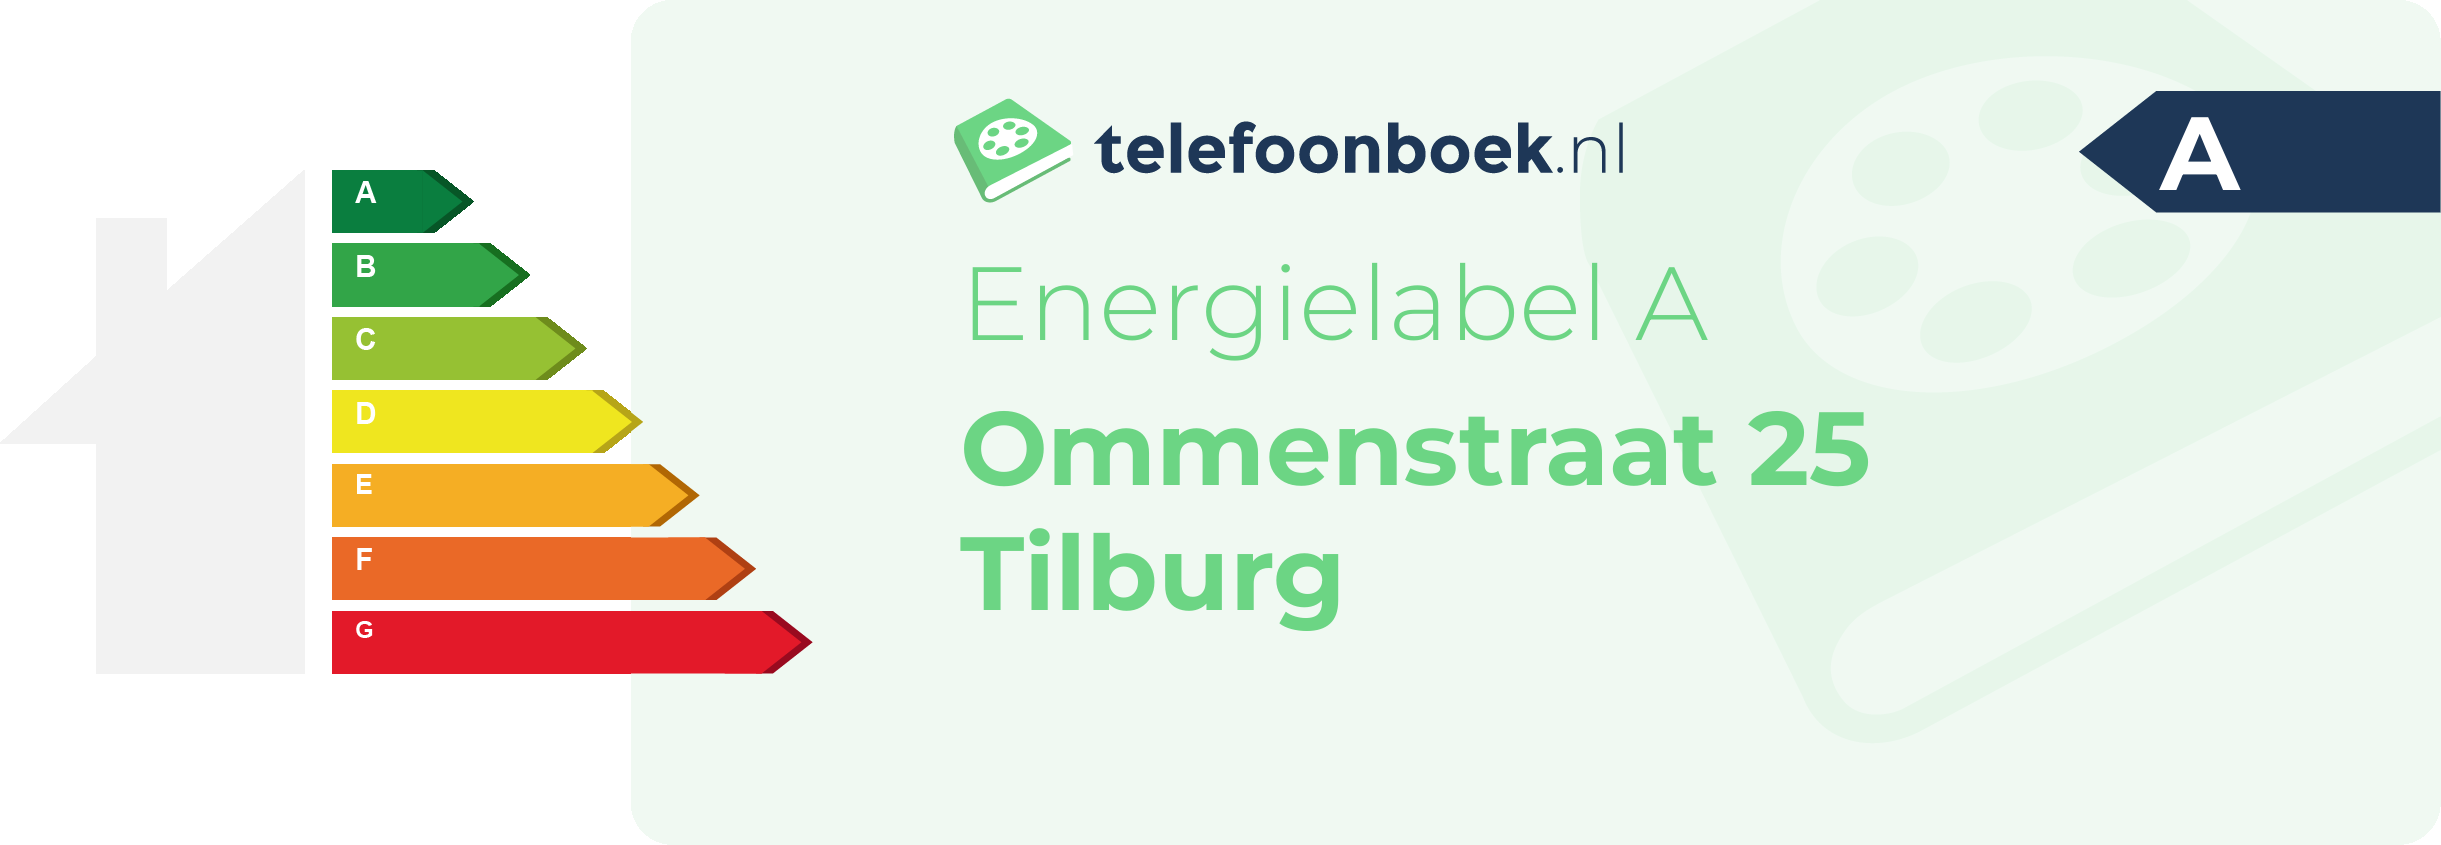 Energielabel Ommenstraat 25 Tilburg